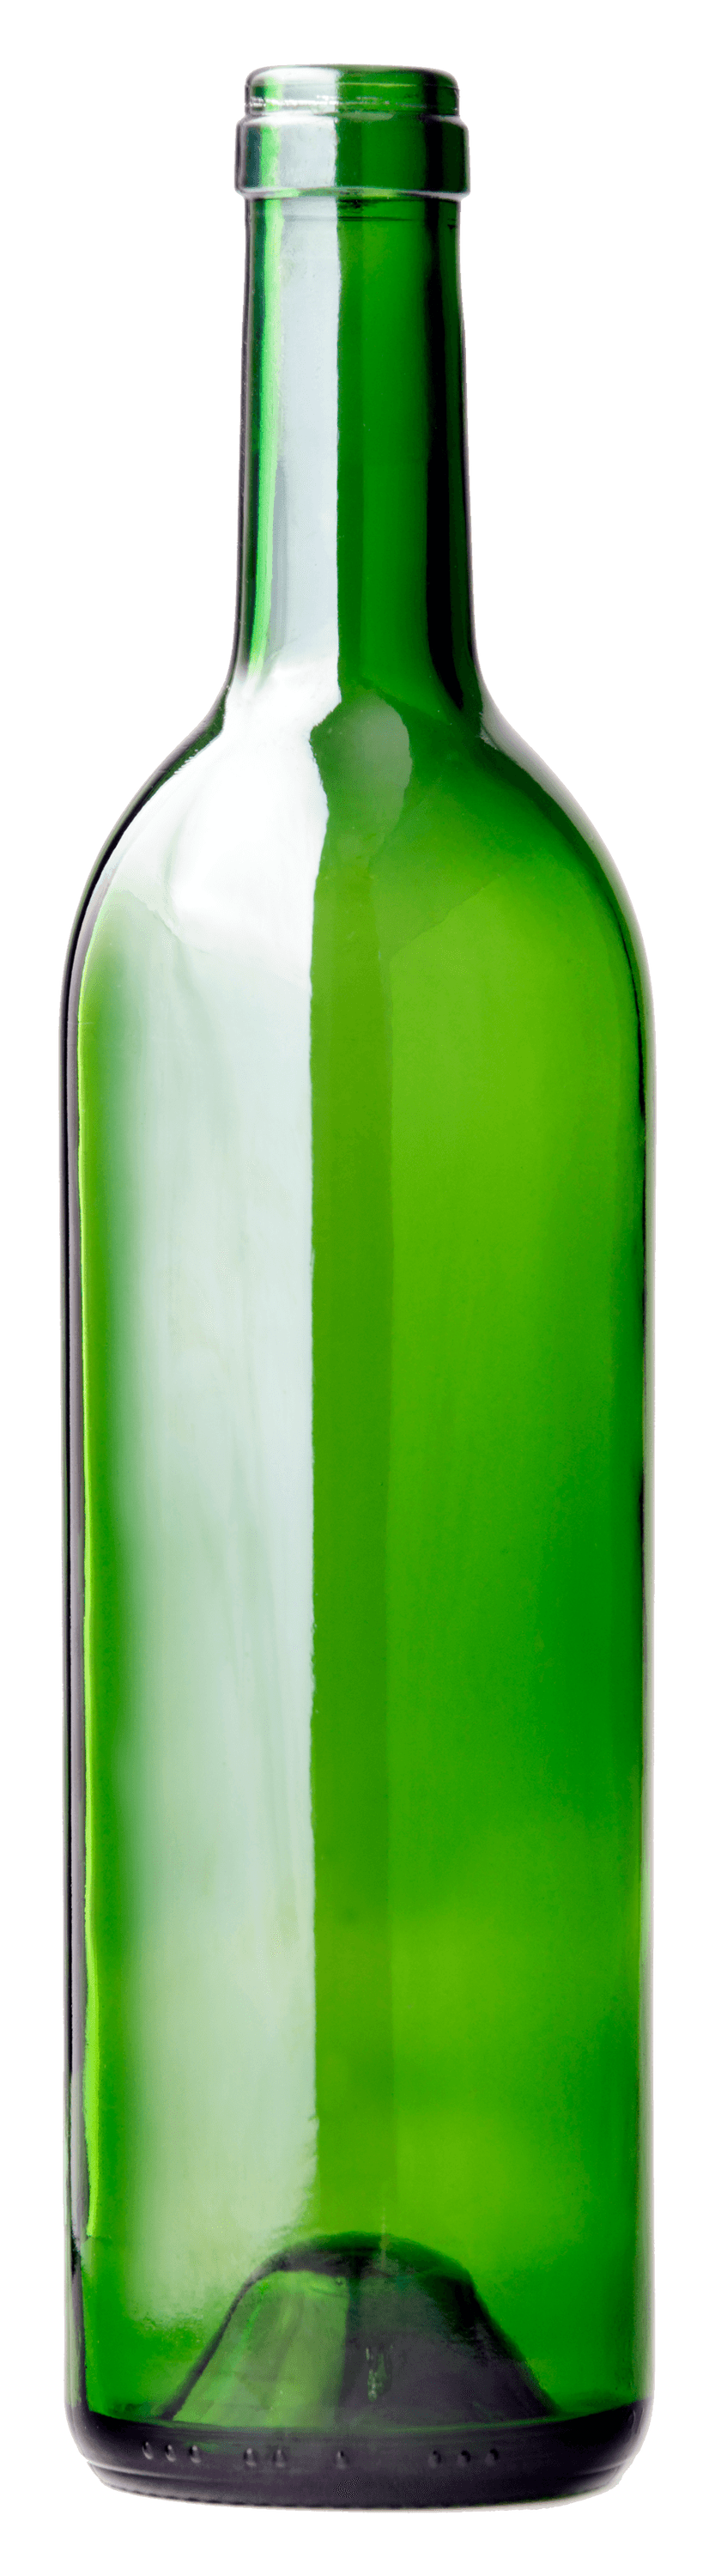 Bottle Long Green SVG Clip arts